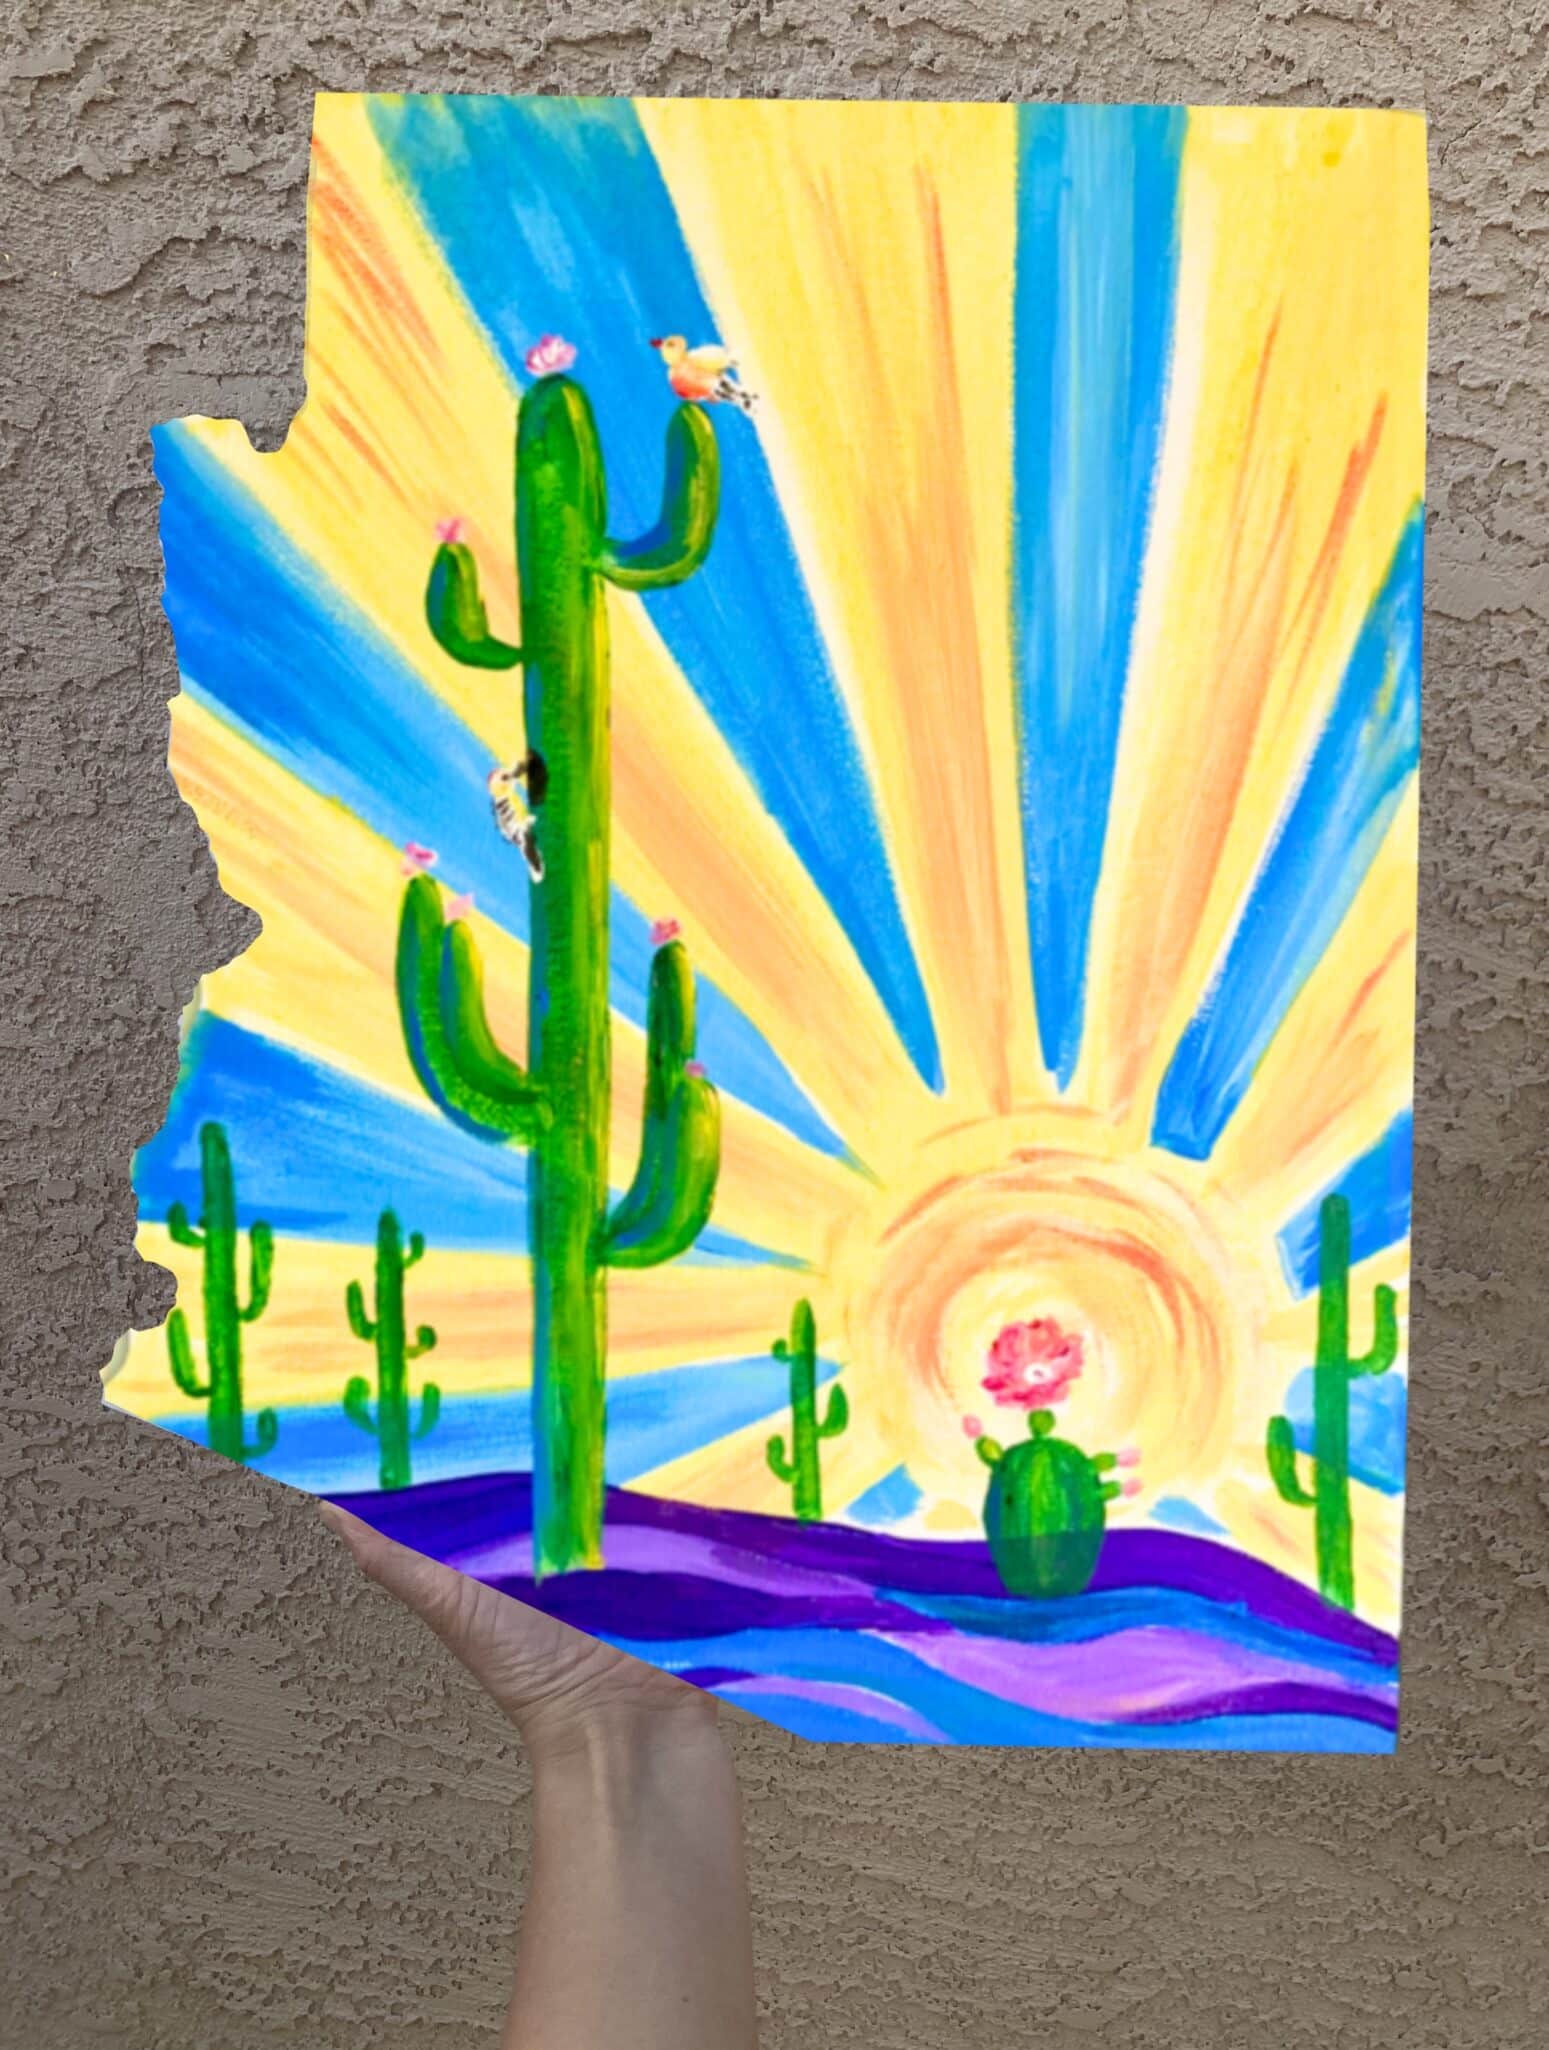 Arizona Love Painting on Wood Cutout Shape - Beginner Paint Class in Tucson, AZ